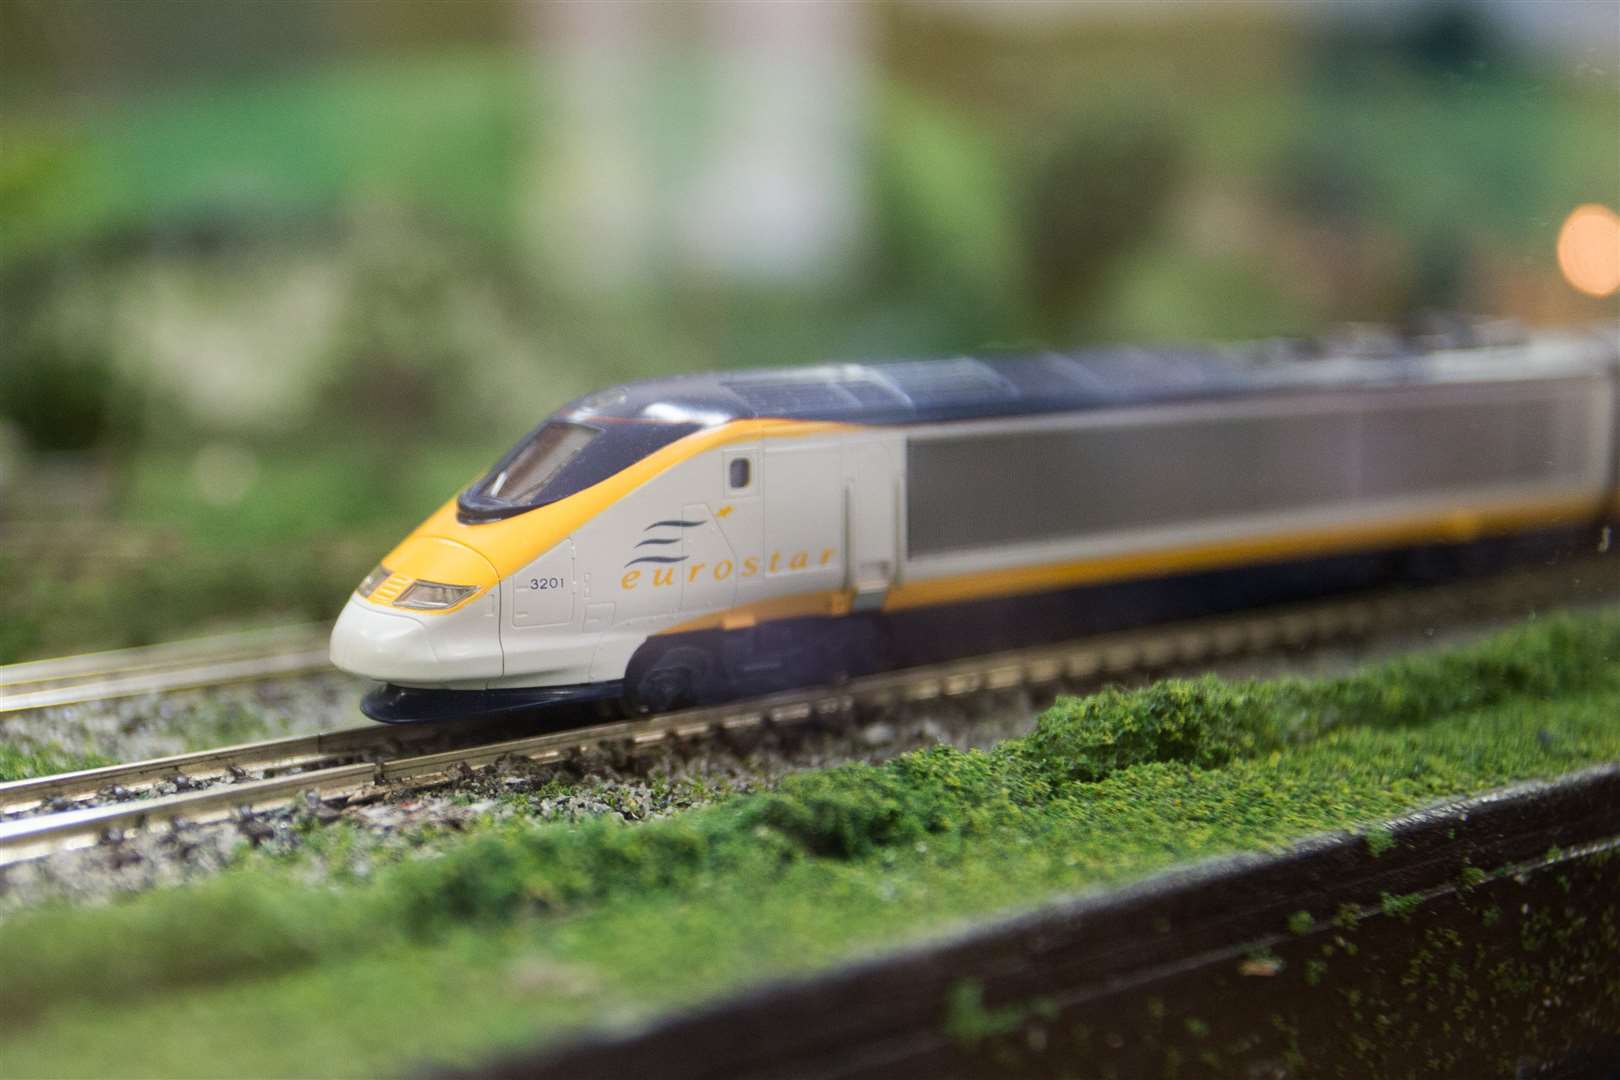 Hornby makes model railways